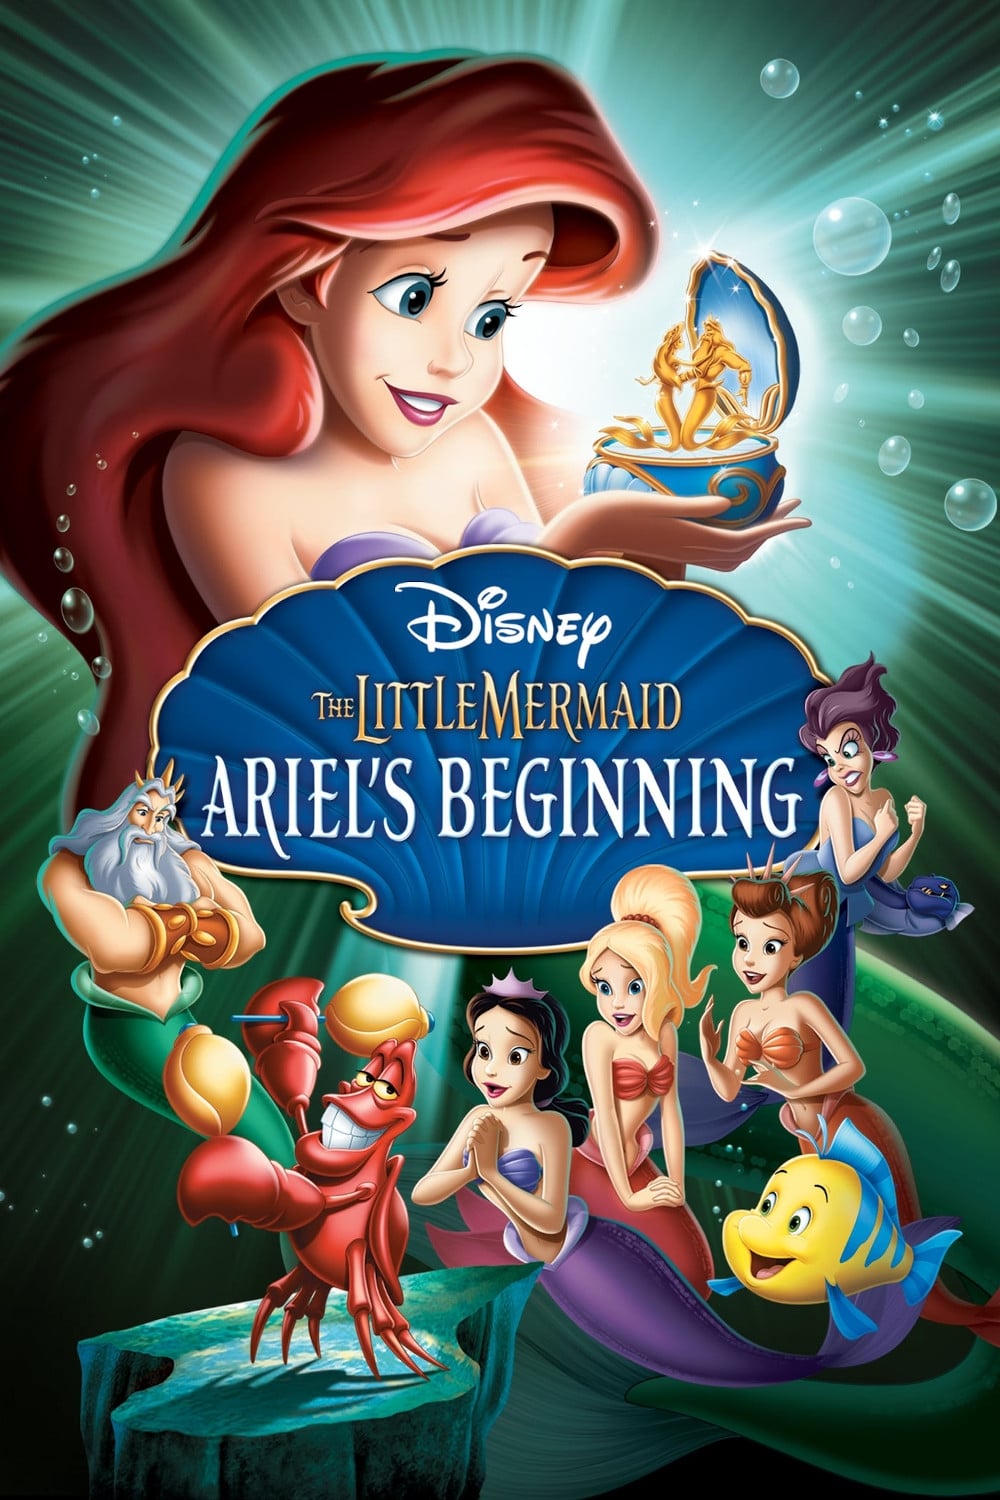 A Pequena Sereia: A História de Ariel (2008)